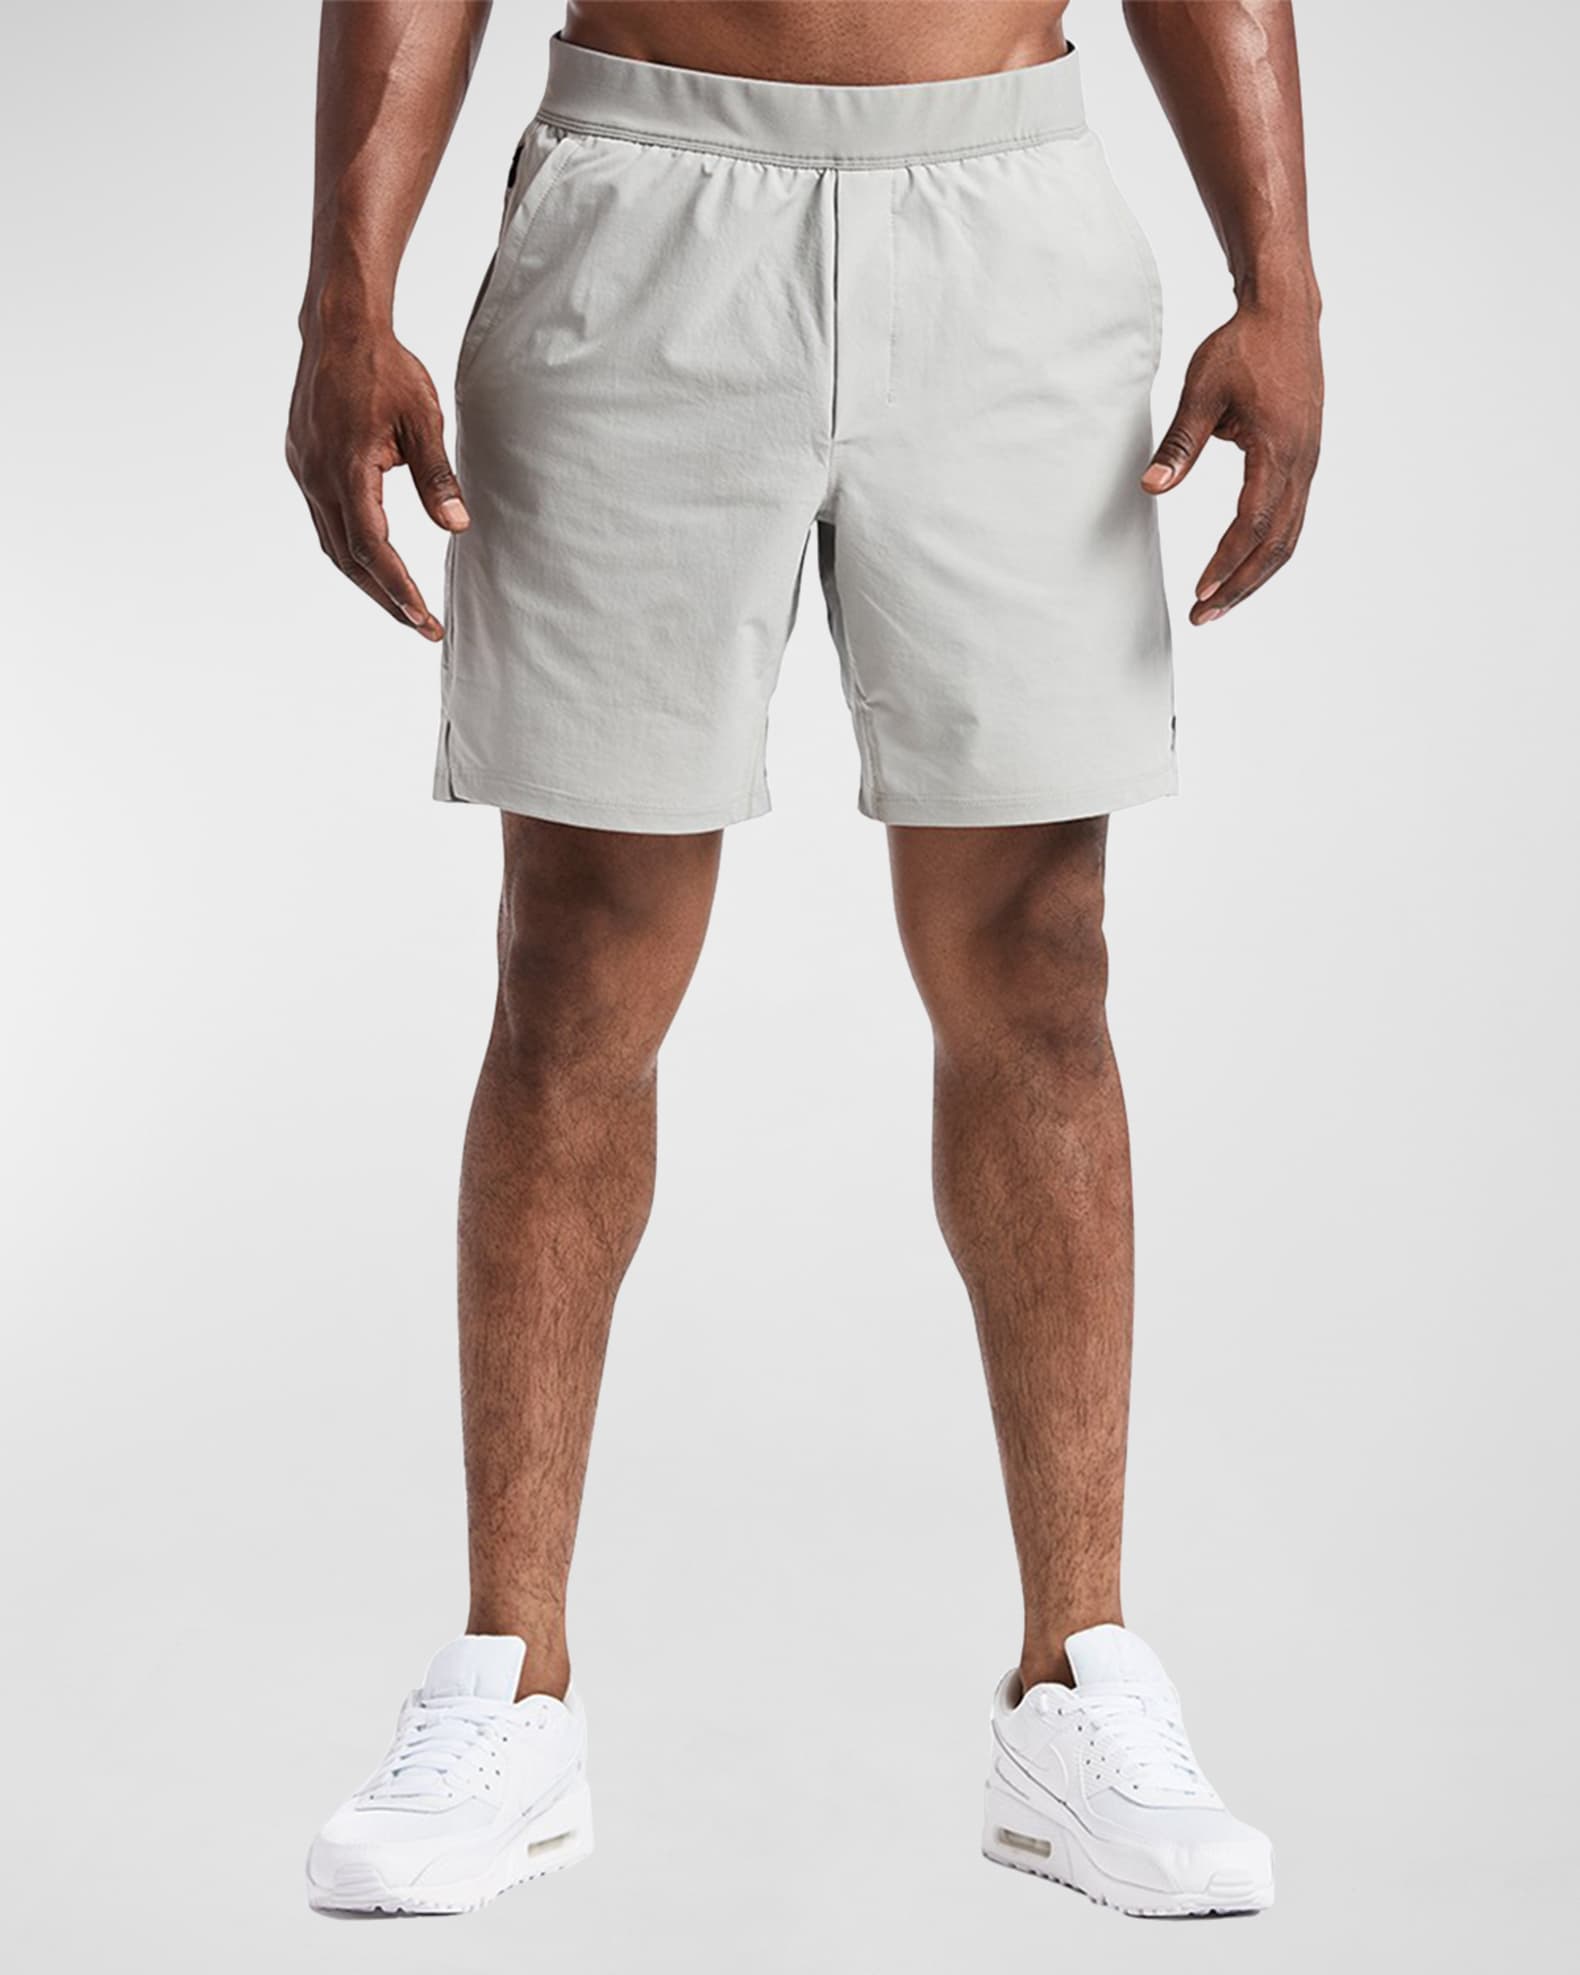 Public Rec Men's Solid Flex Athletic Shorts | Neiman Marcus